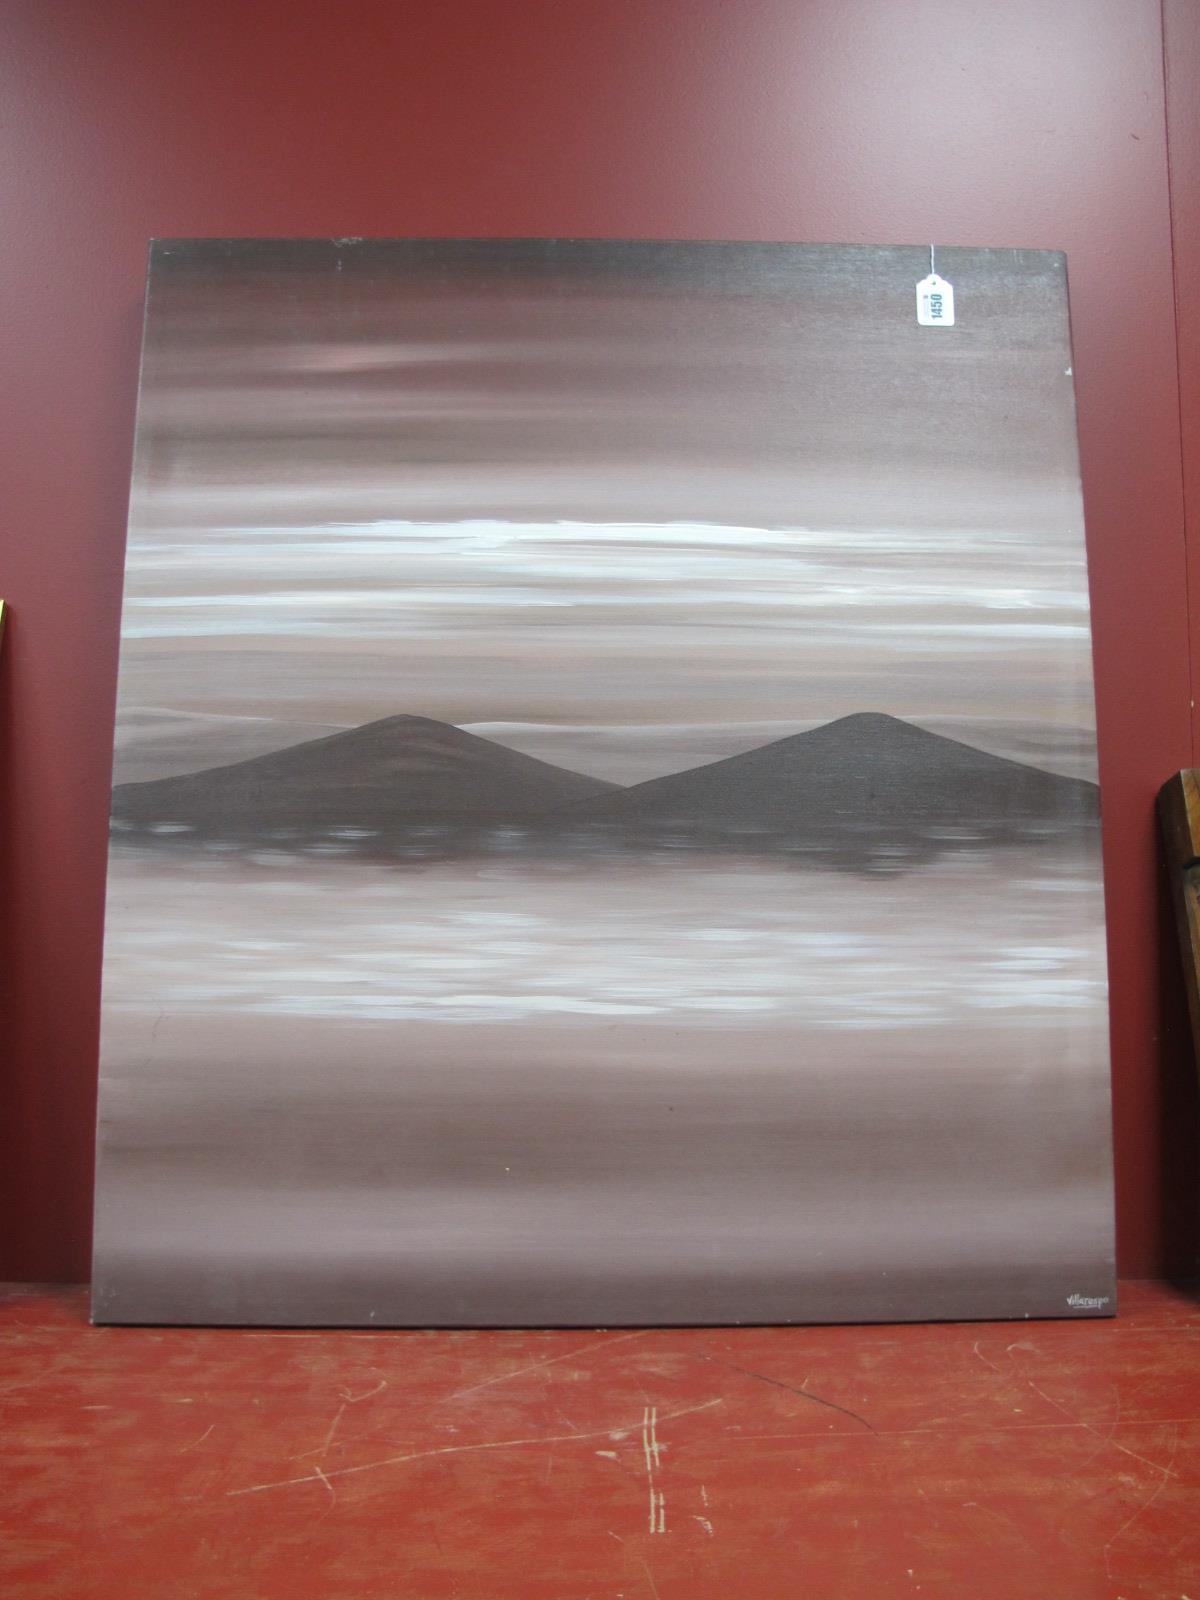 Villarospo, 'Highland Dream', acrylic on canvas, signed lower right, 90 x 80cm.